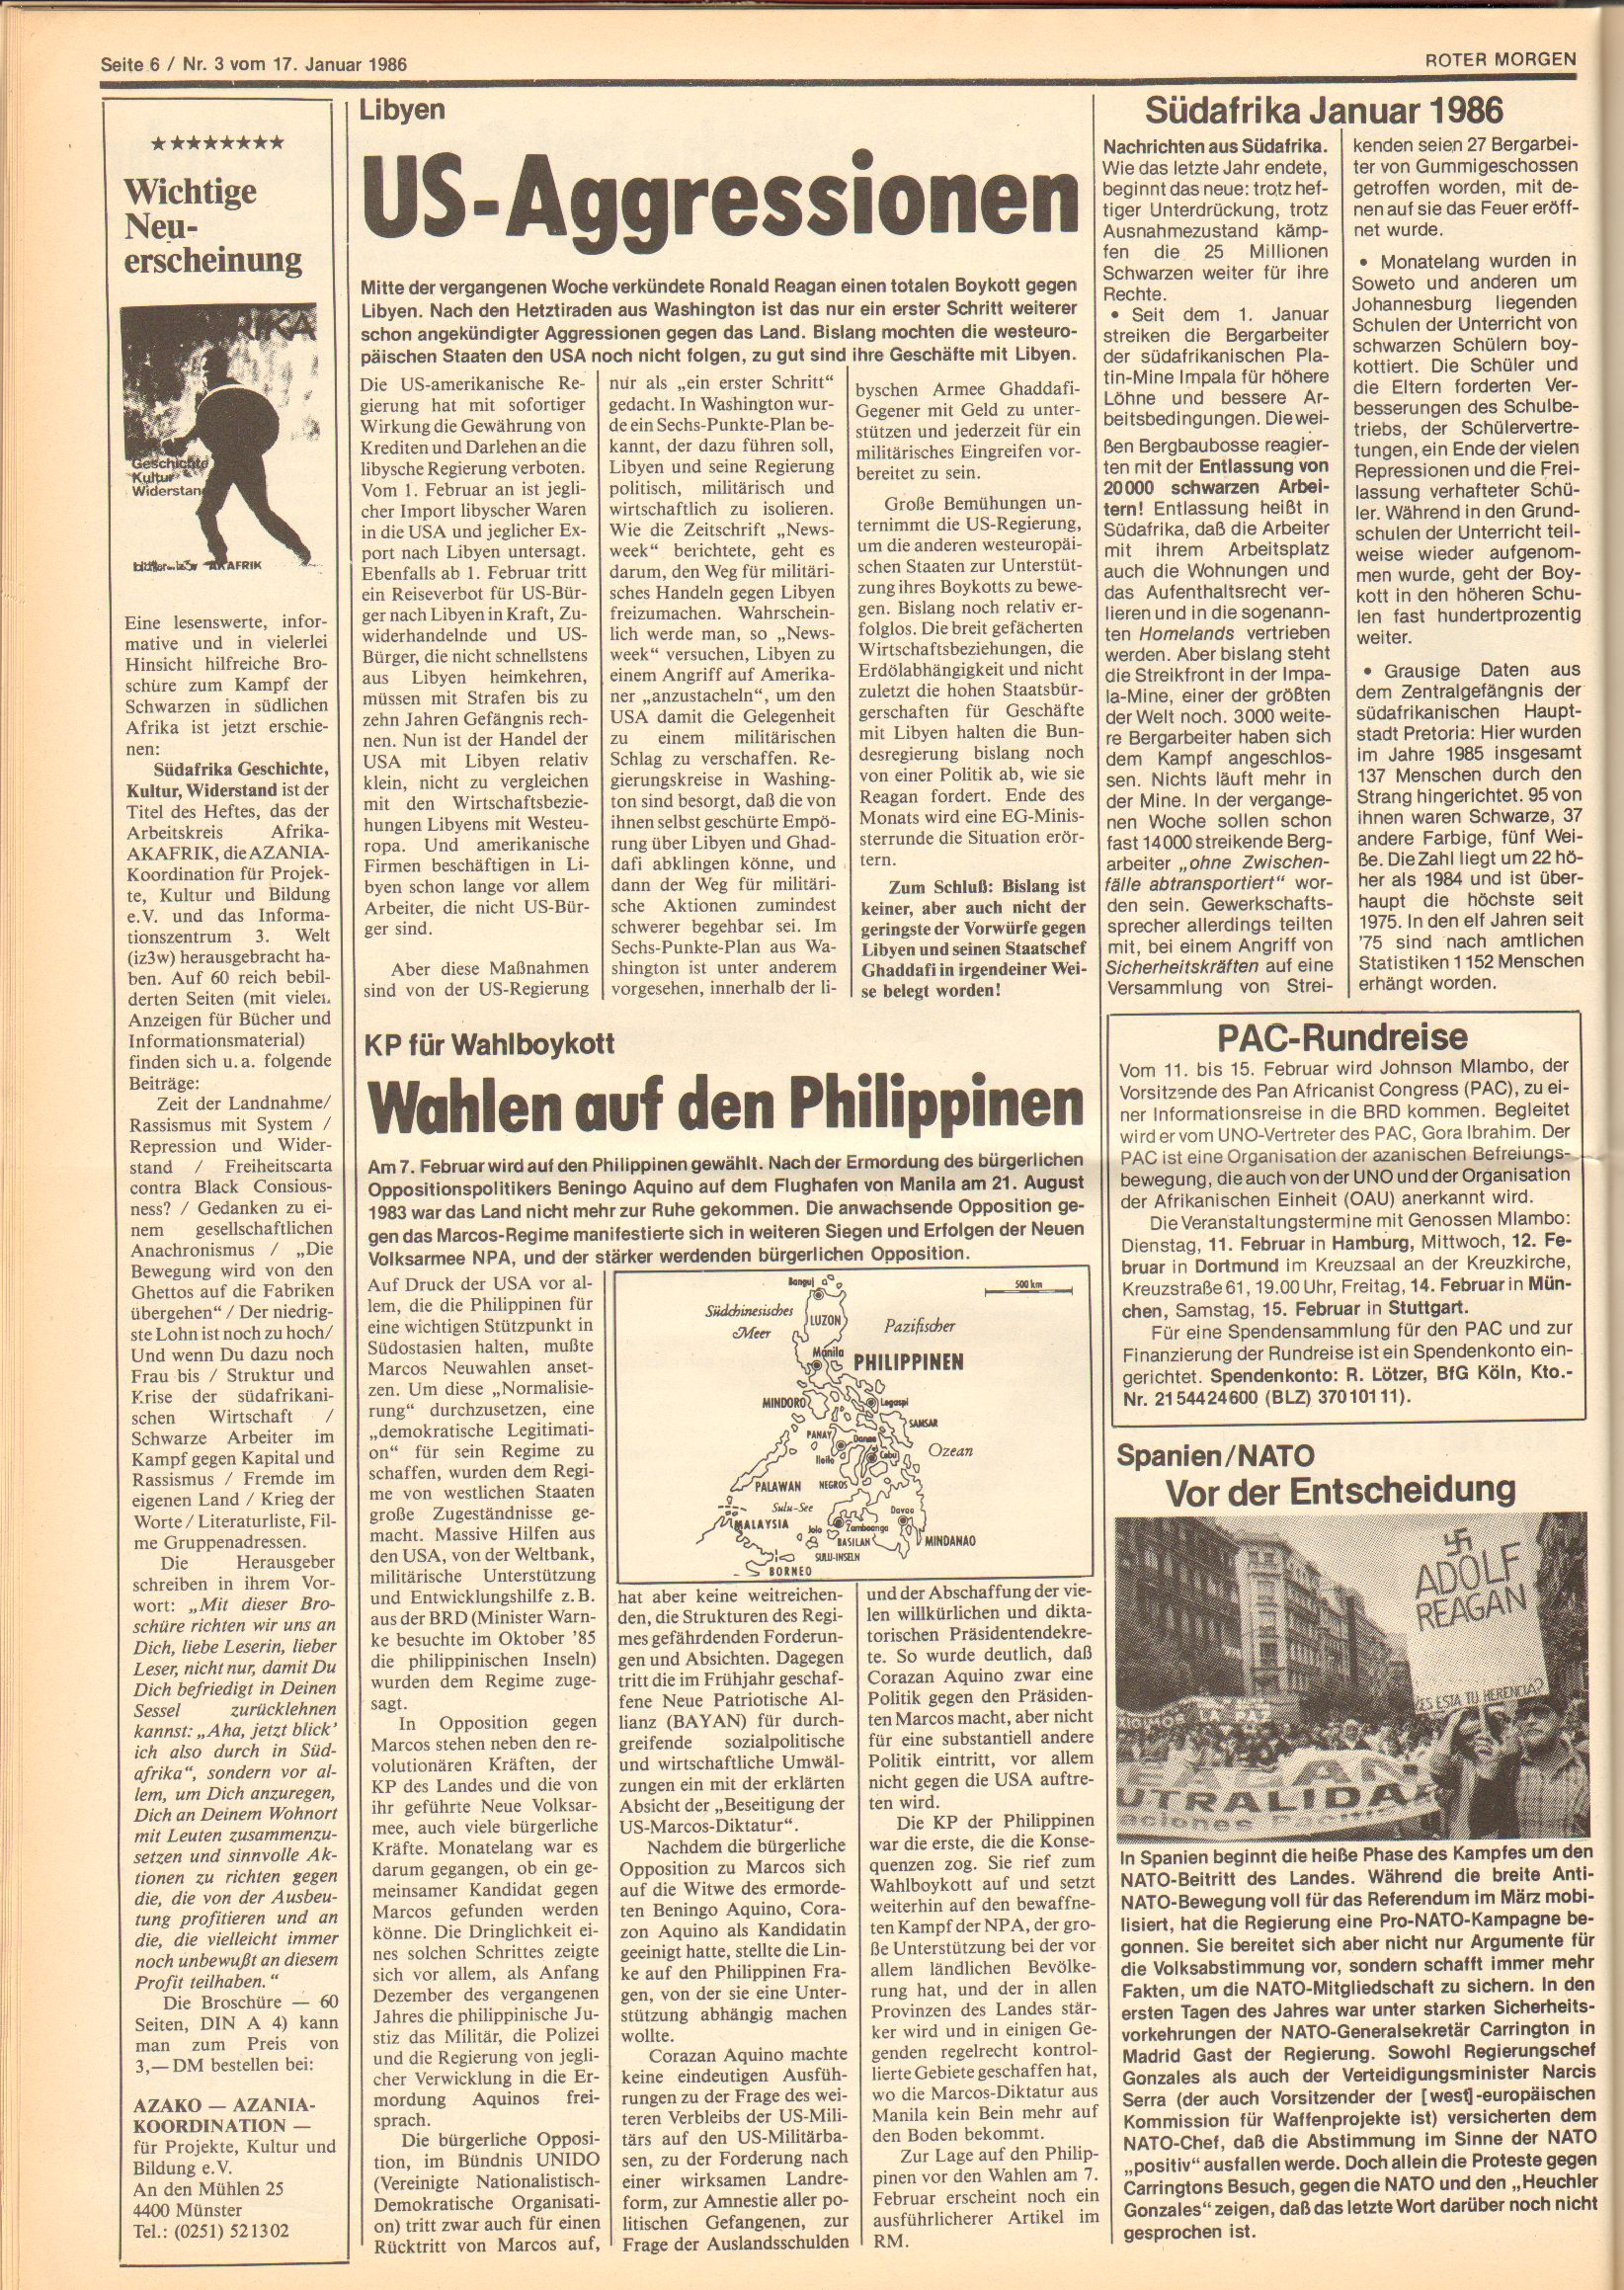 Roter Morgen, 20. Jg., 17. Januar 1986, Nr. 3, Seite 6